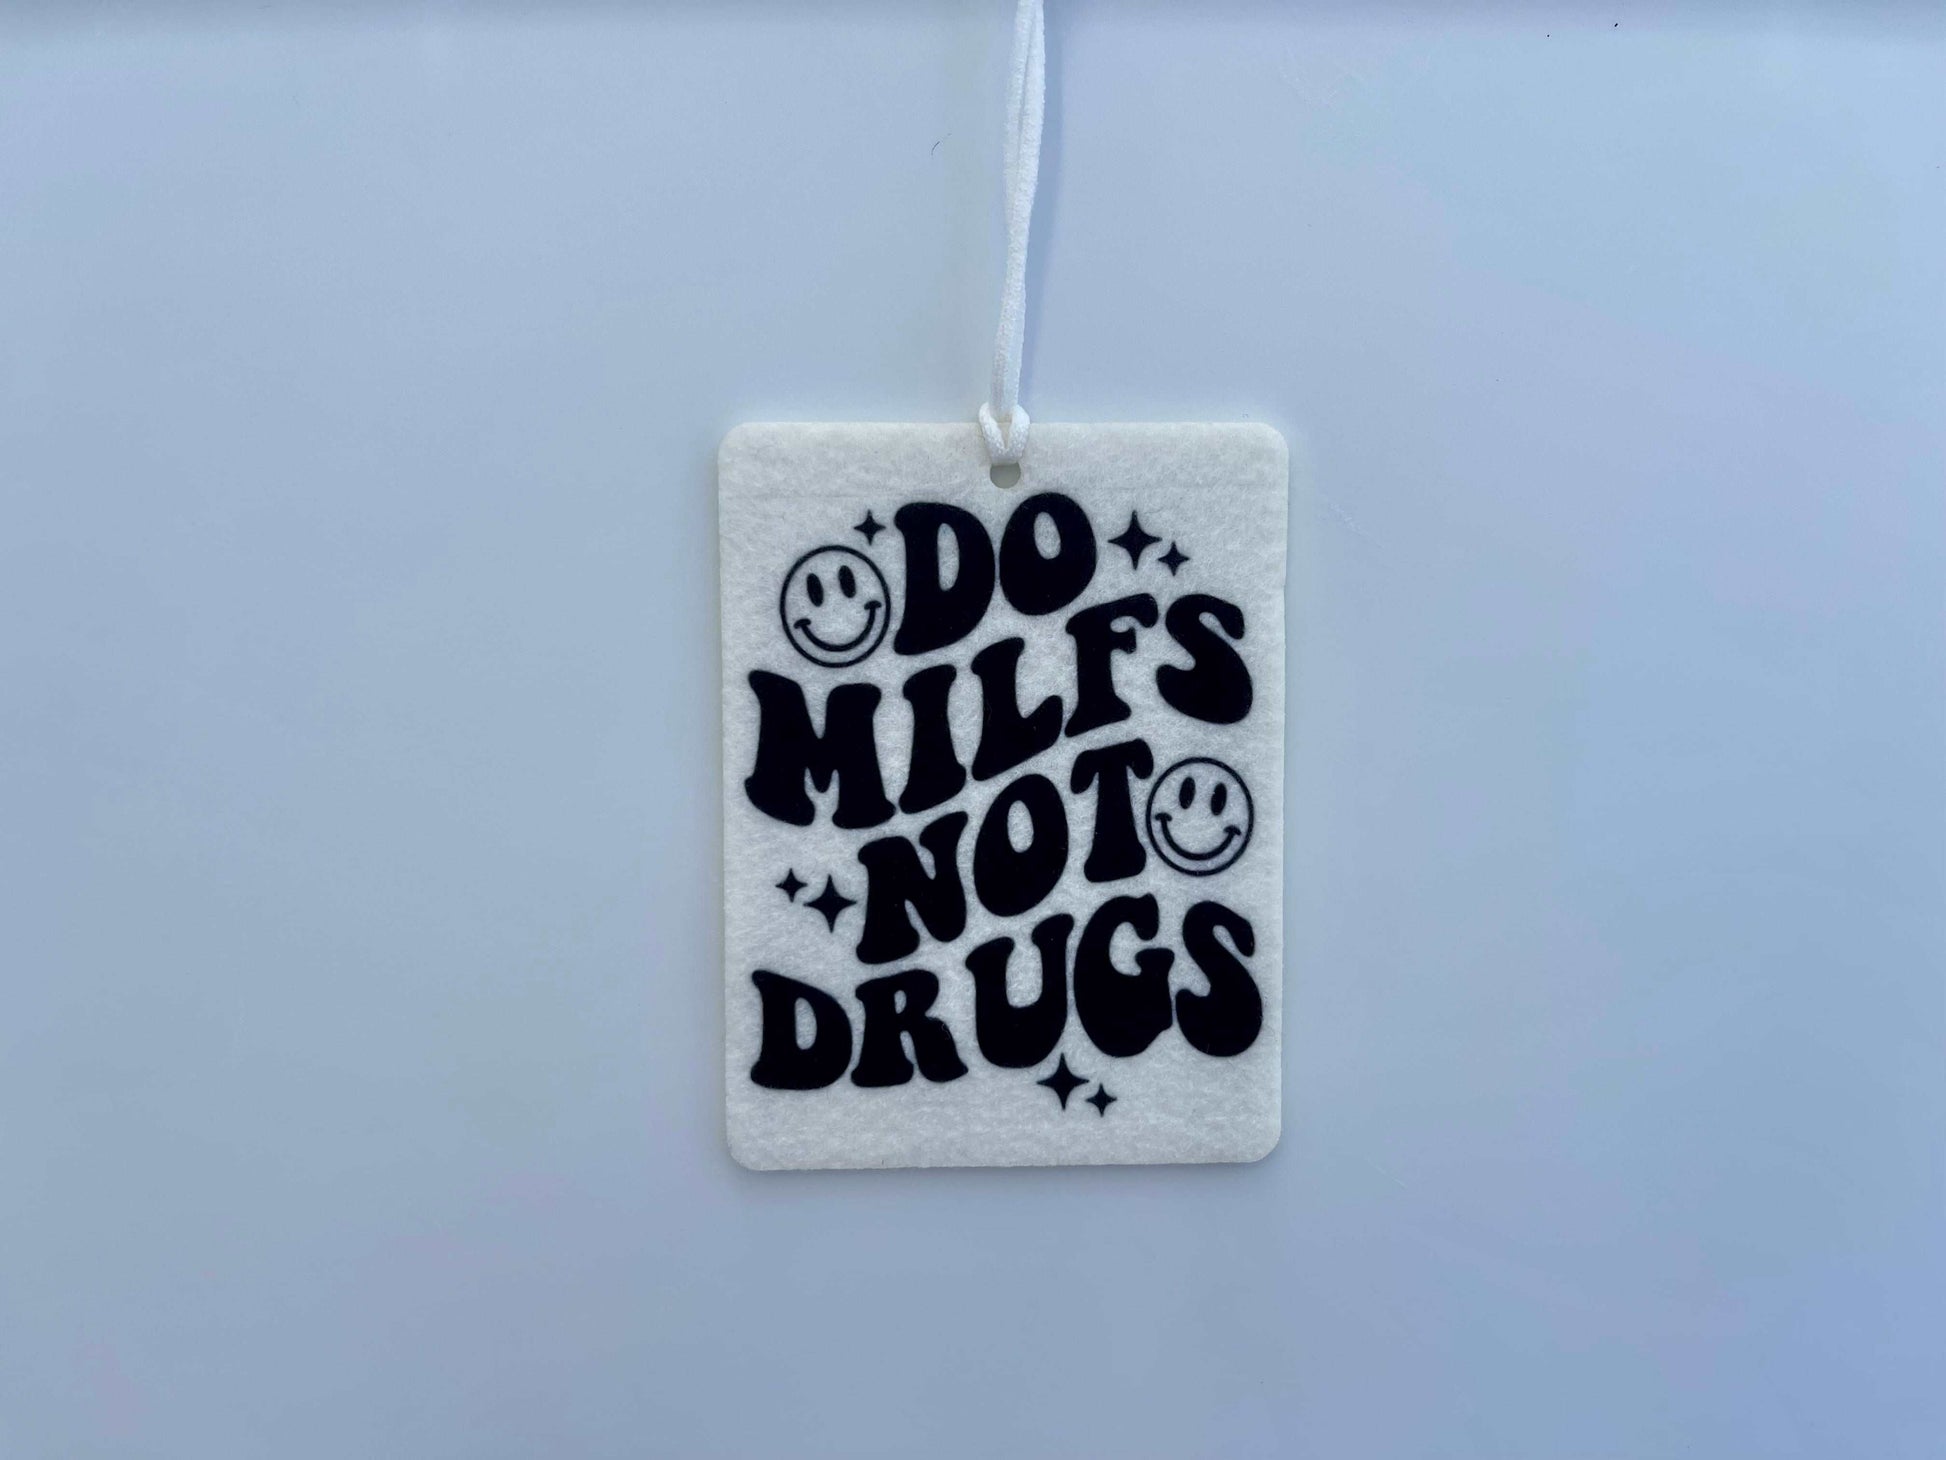 Do MILFS, Not Drugs